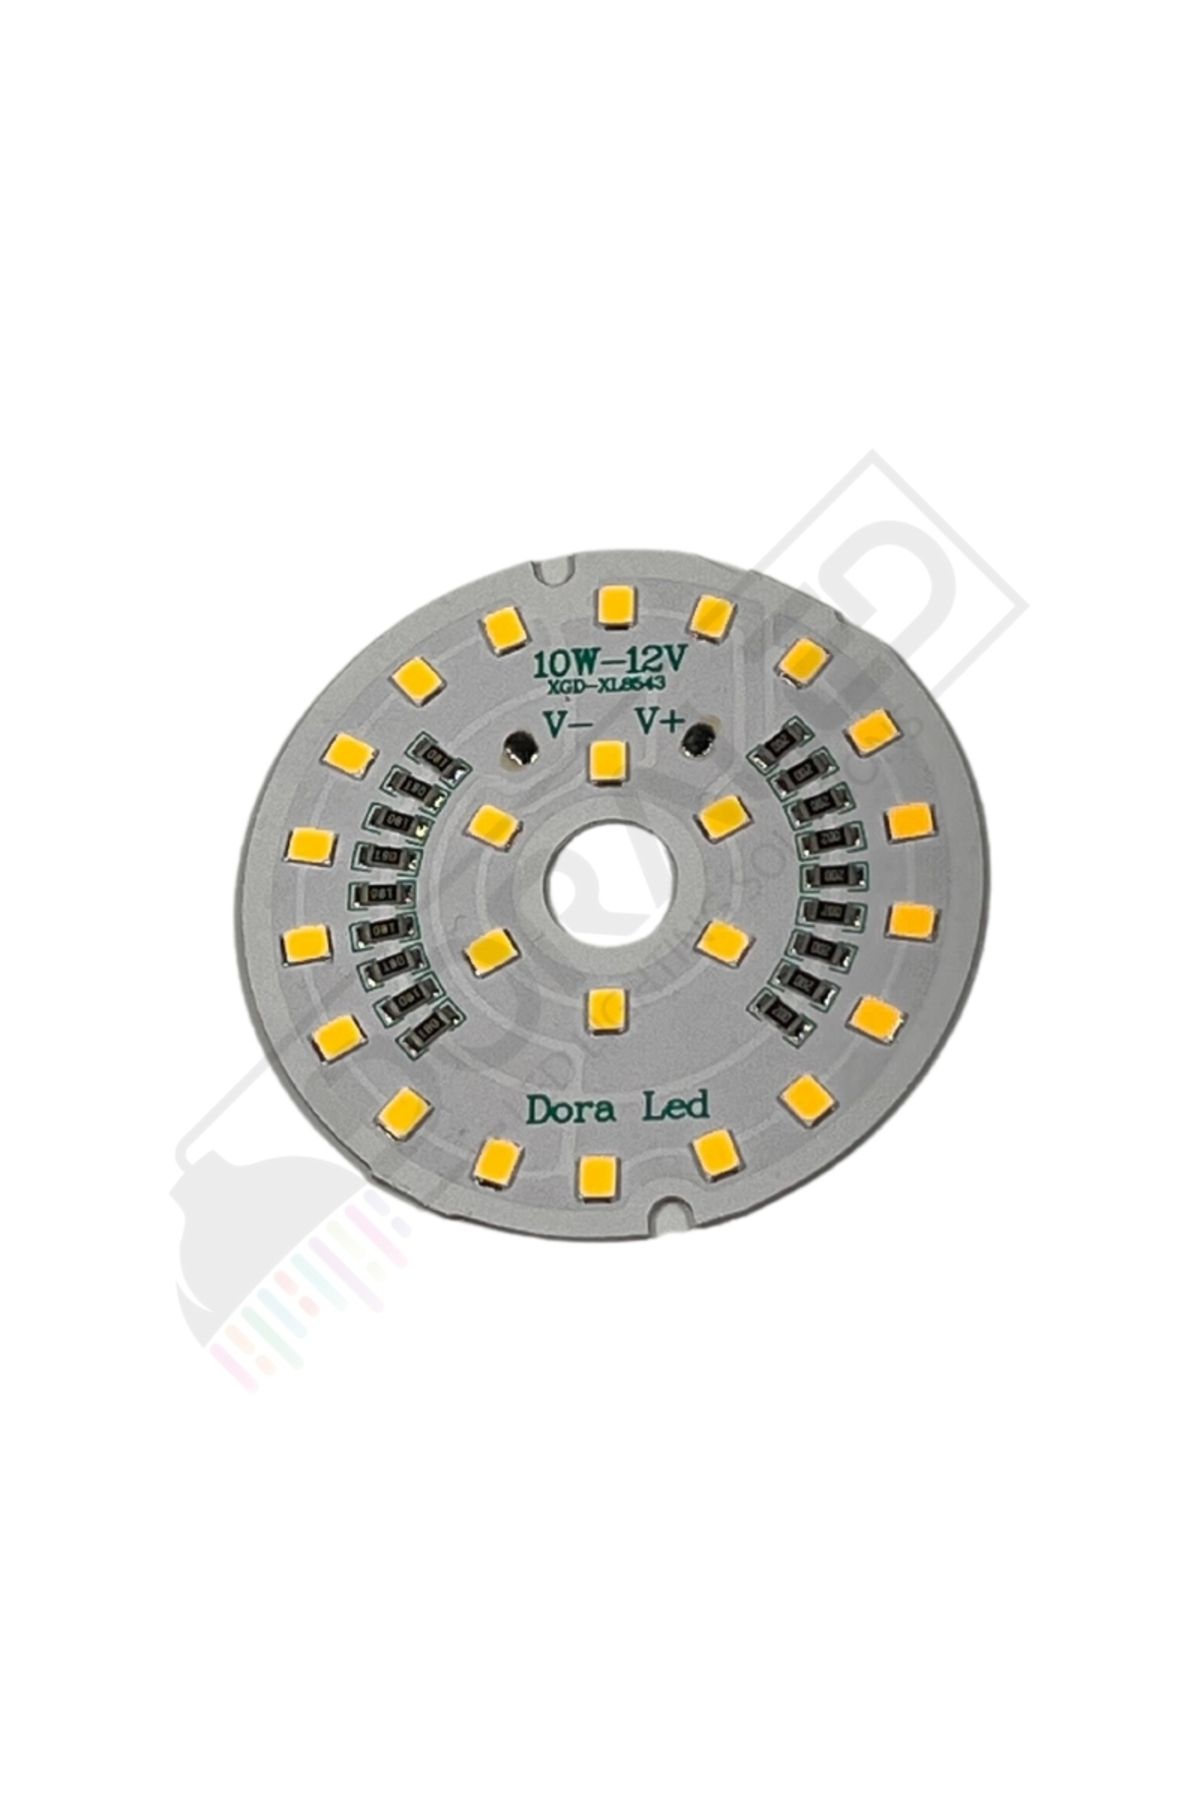 DORA LED 12volt 10watt Smd 5630 Ledli Led Modül Gün Işığı 10mm Delik Çaplı 12v 10w Avize Ledi 56mm(3 ADET)